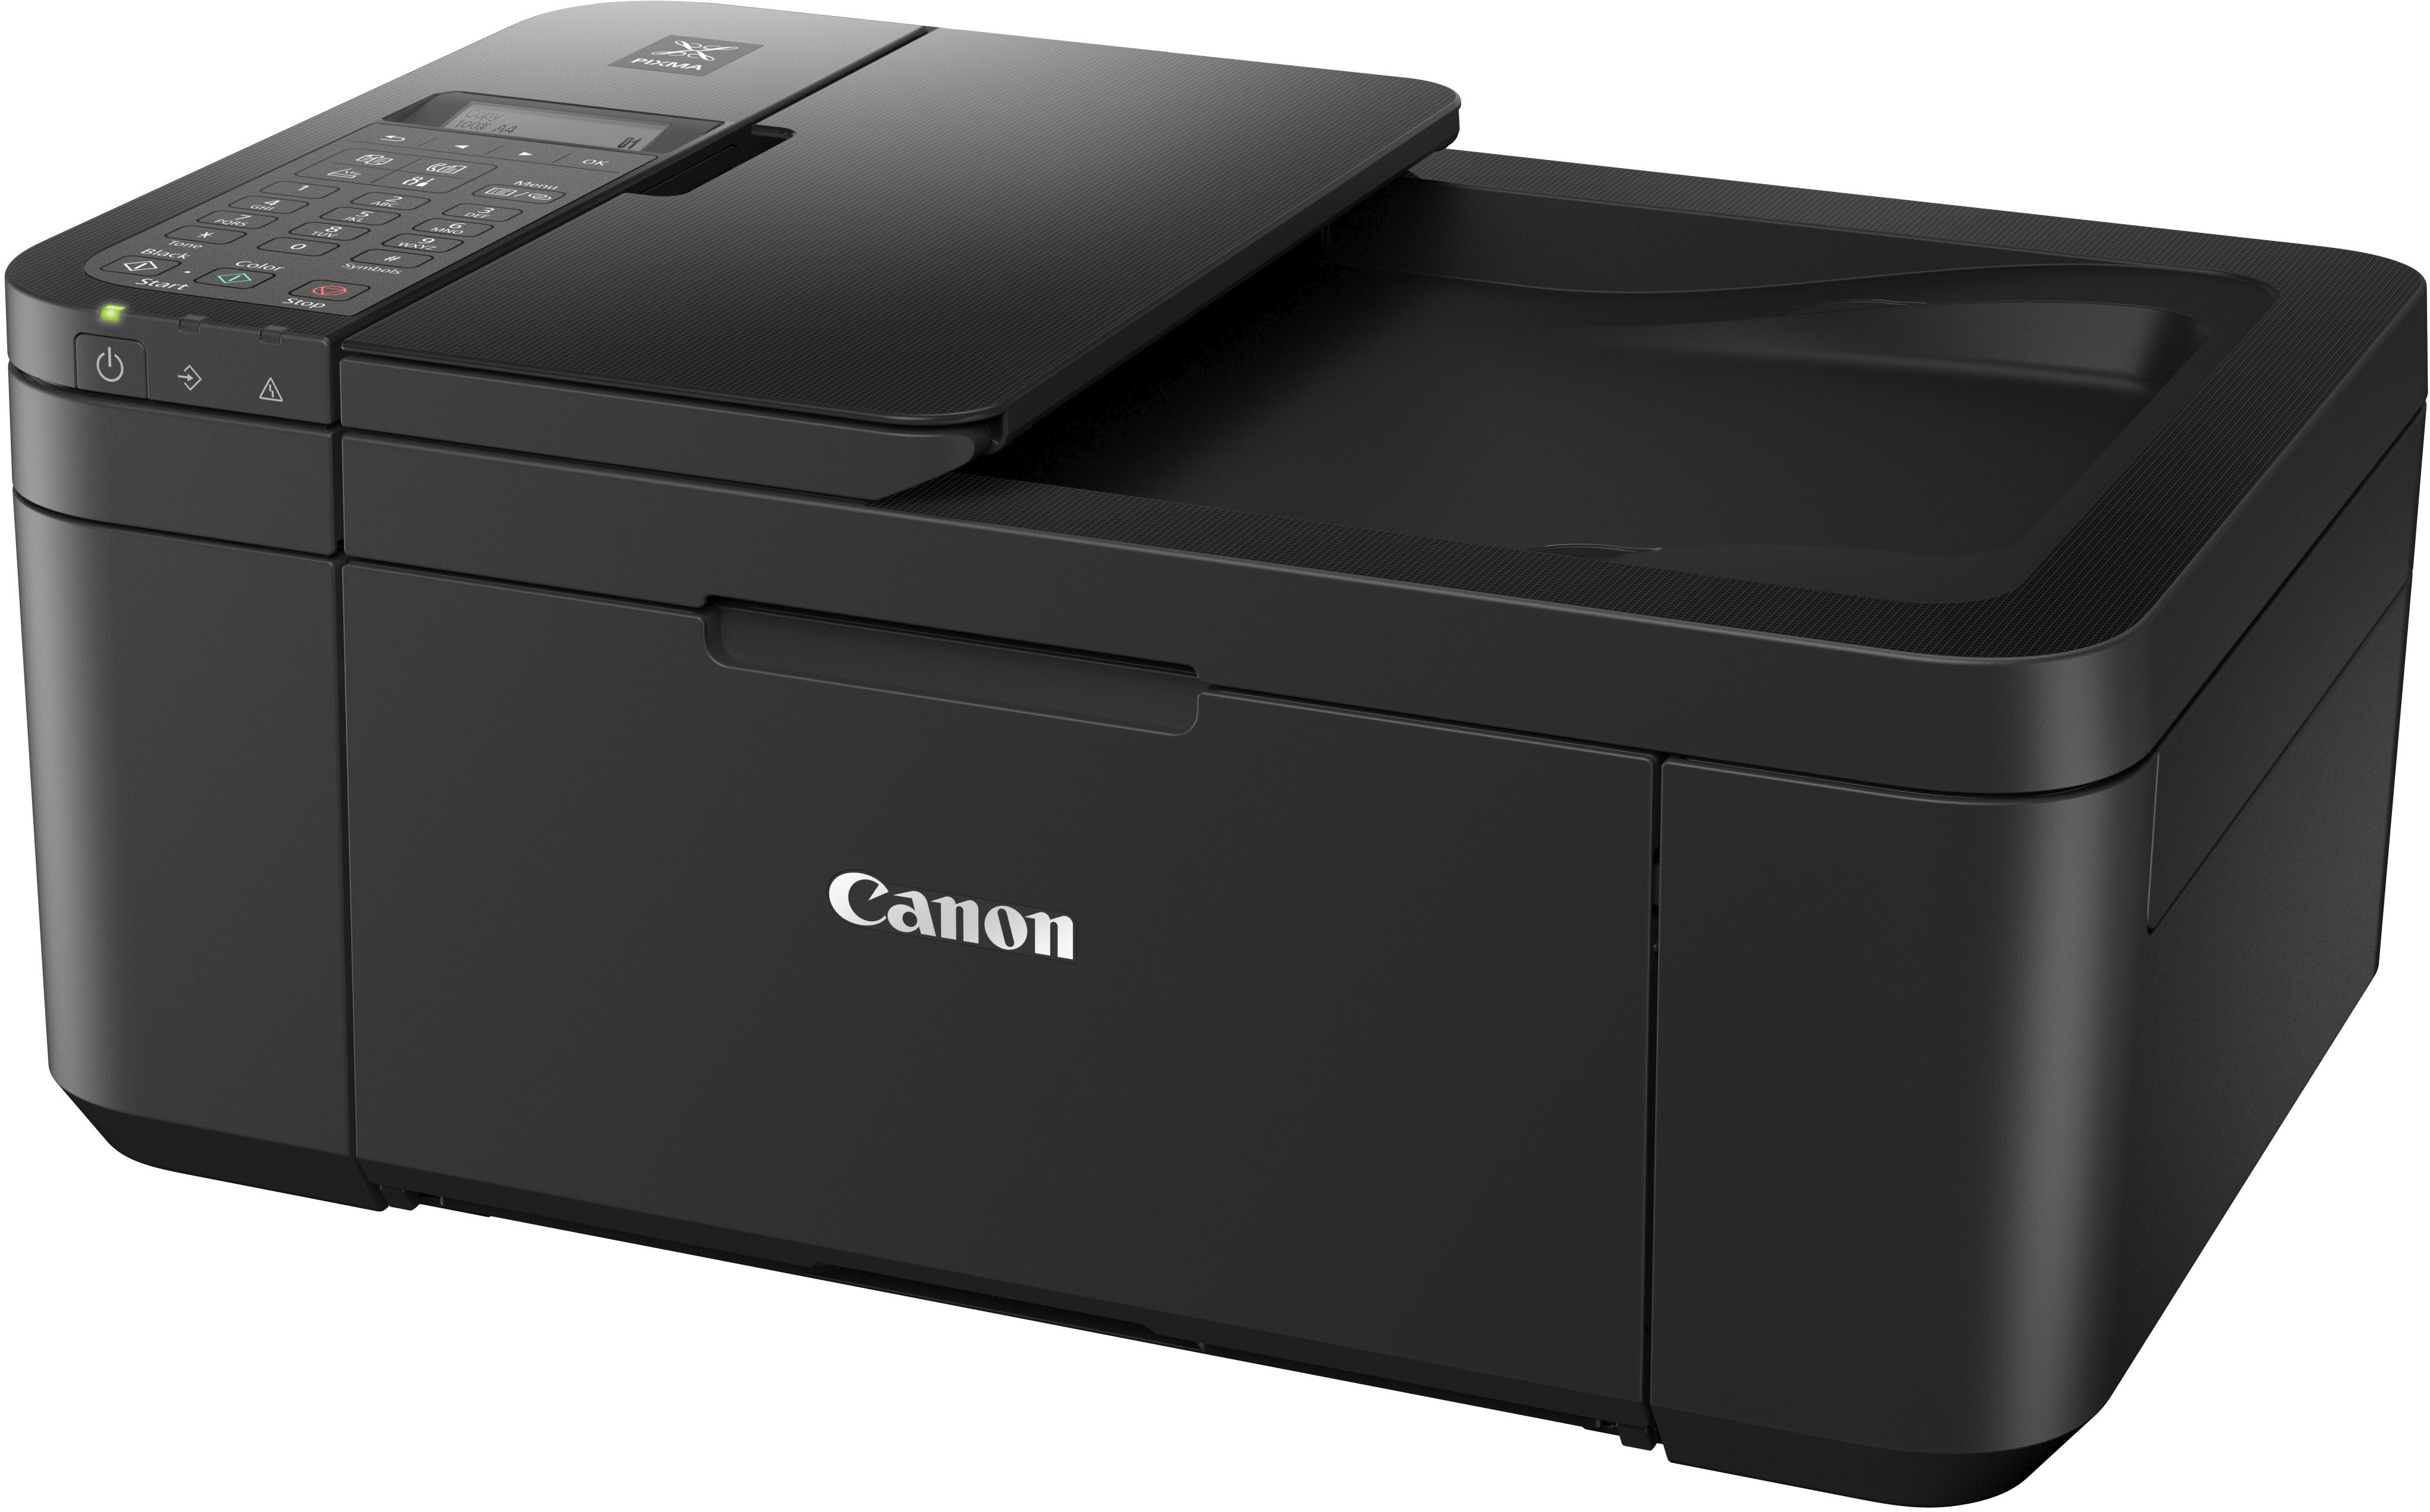 Angle View: Canon - PIXMA TR4522 Wireless All-In-One Inkjet Printer - Black